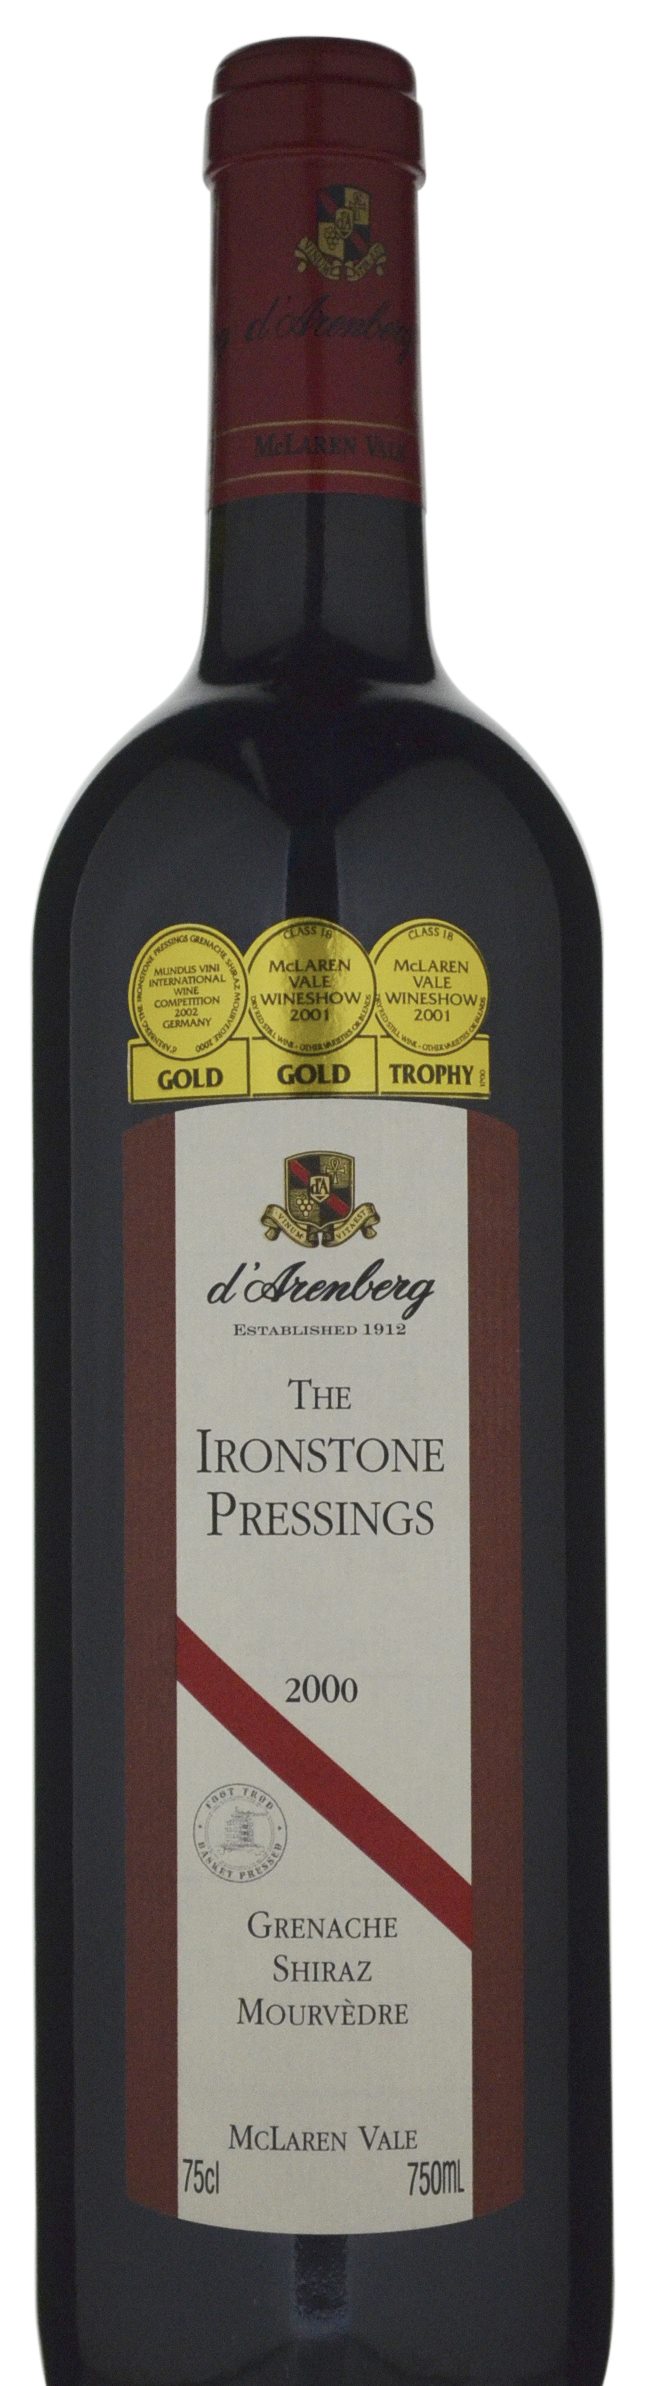 d'Arenberg The Ironstone Pressings Grenache Shiraz Mourvedre 2000